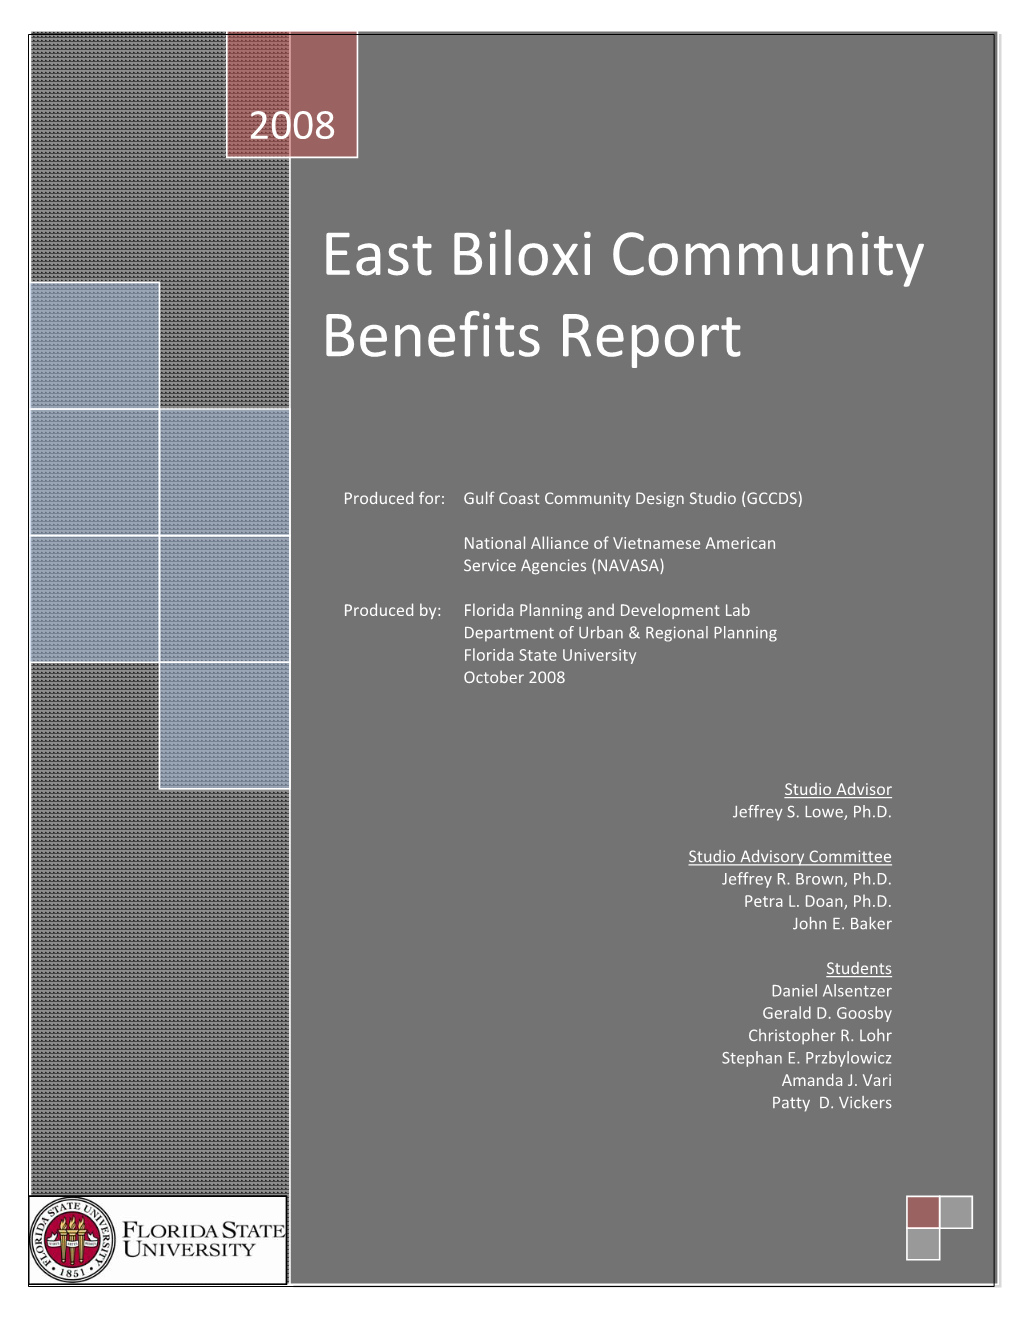 East Biloxi Community Benefits Report